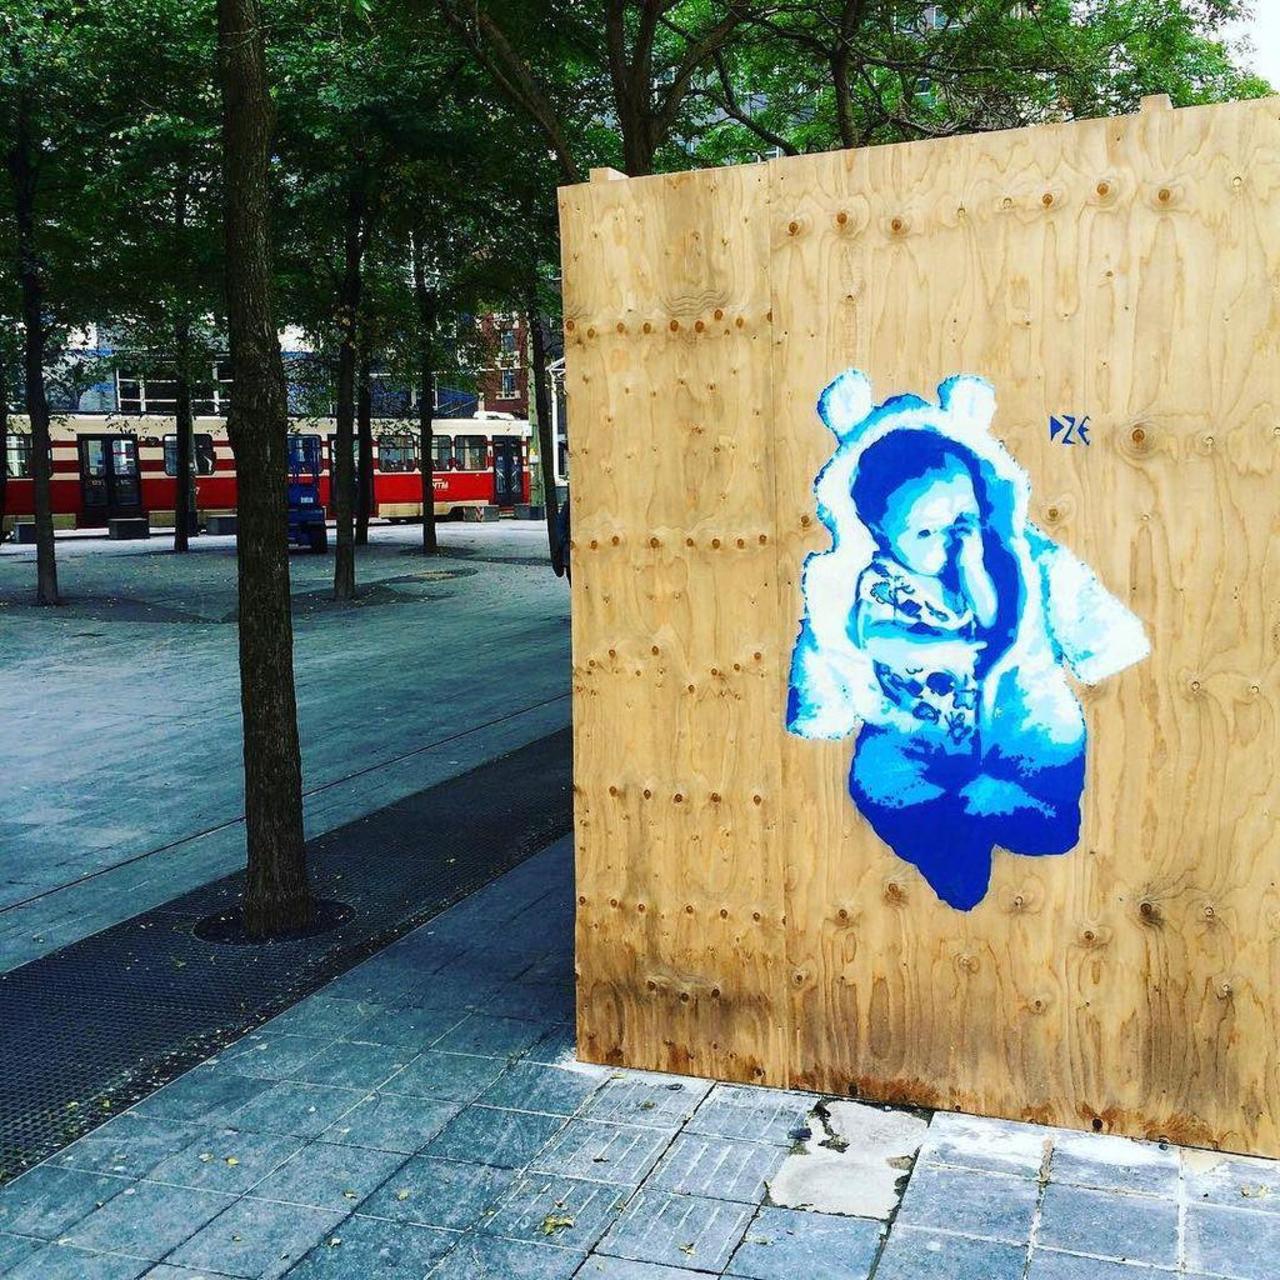 PZE - The Hague, The Netherlands #streetart #graffiti #stencil #baby #thehague #thenetherl… http://ift.tt/1LCDXIw http://t.co/p66axM4qgp